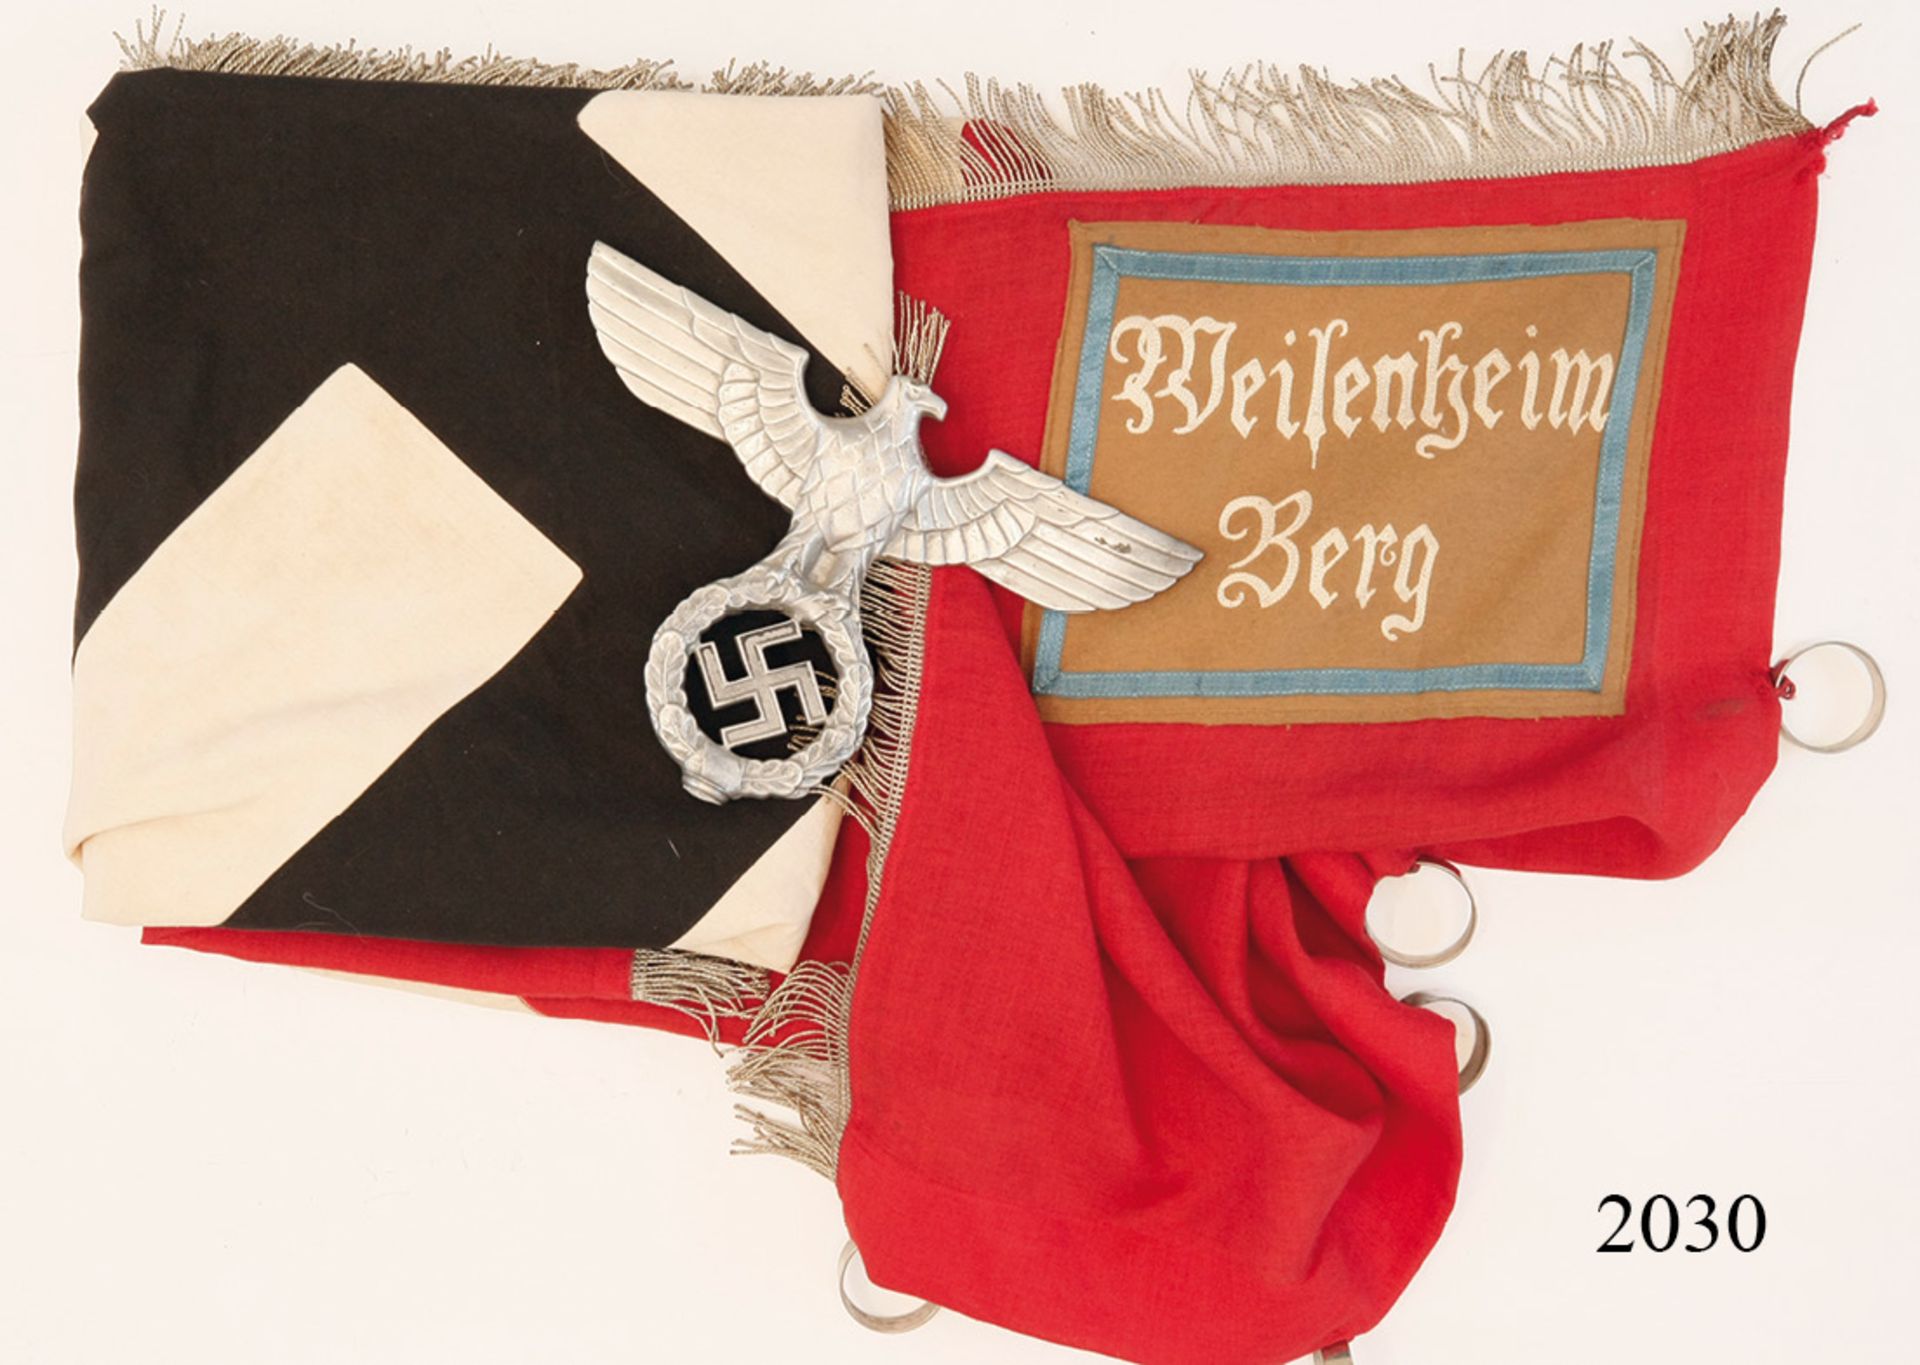 NSDAP-Standarte "Meißenheim Berg"